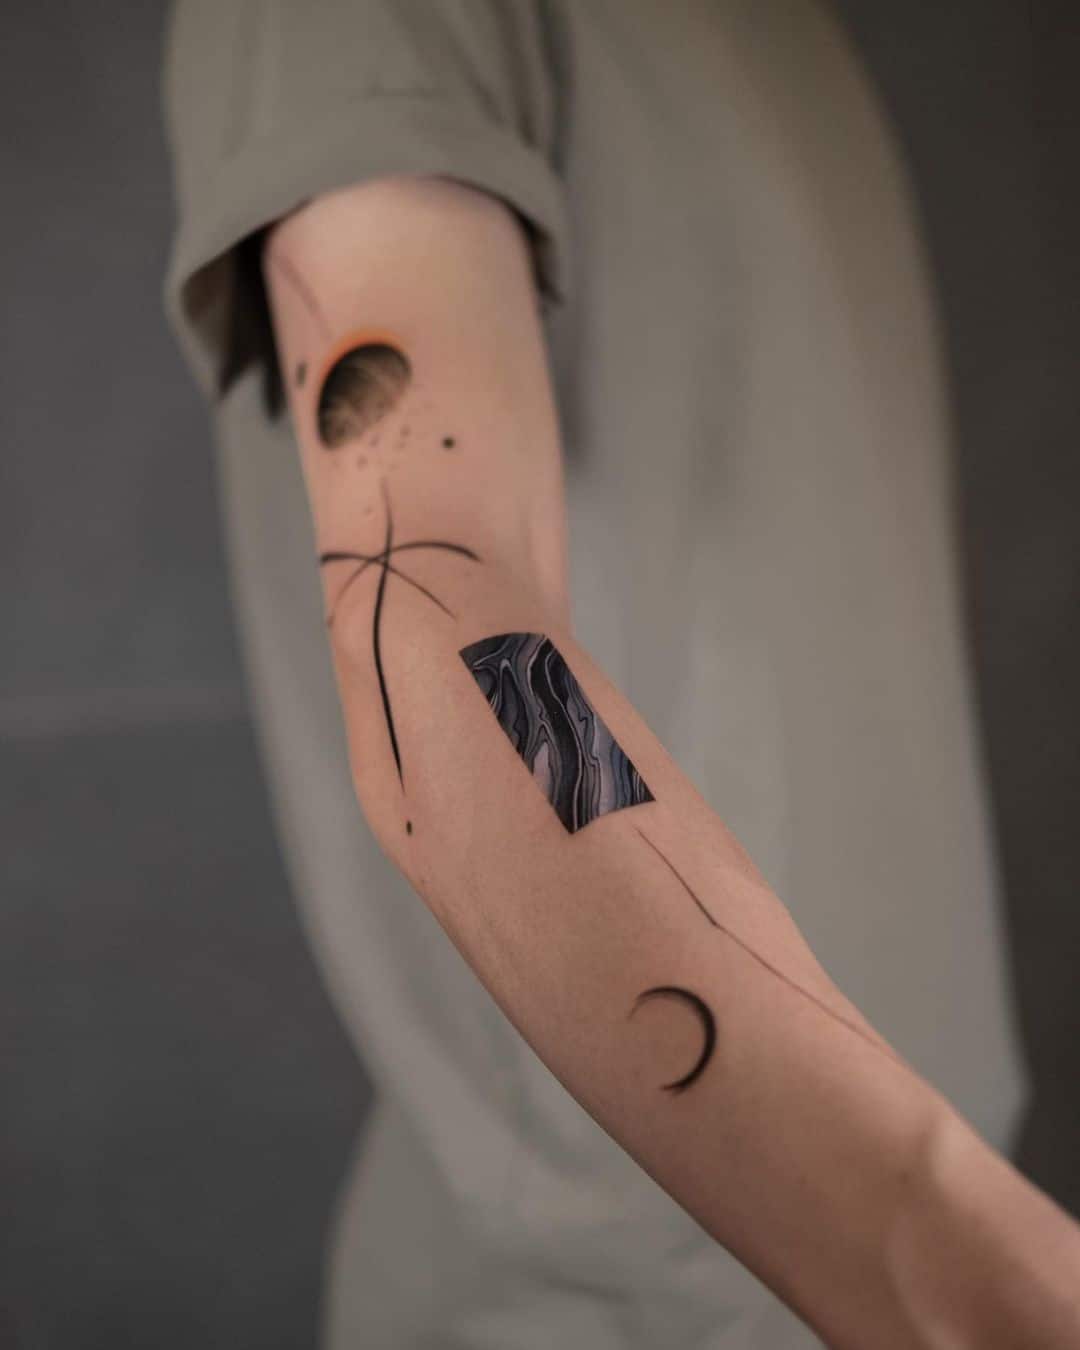 Small asbtract tattoo on forearm by newtattoo demi